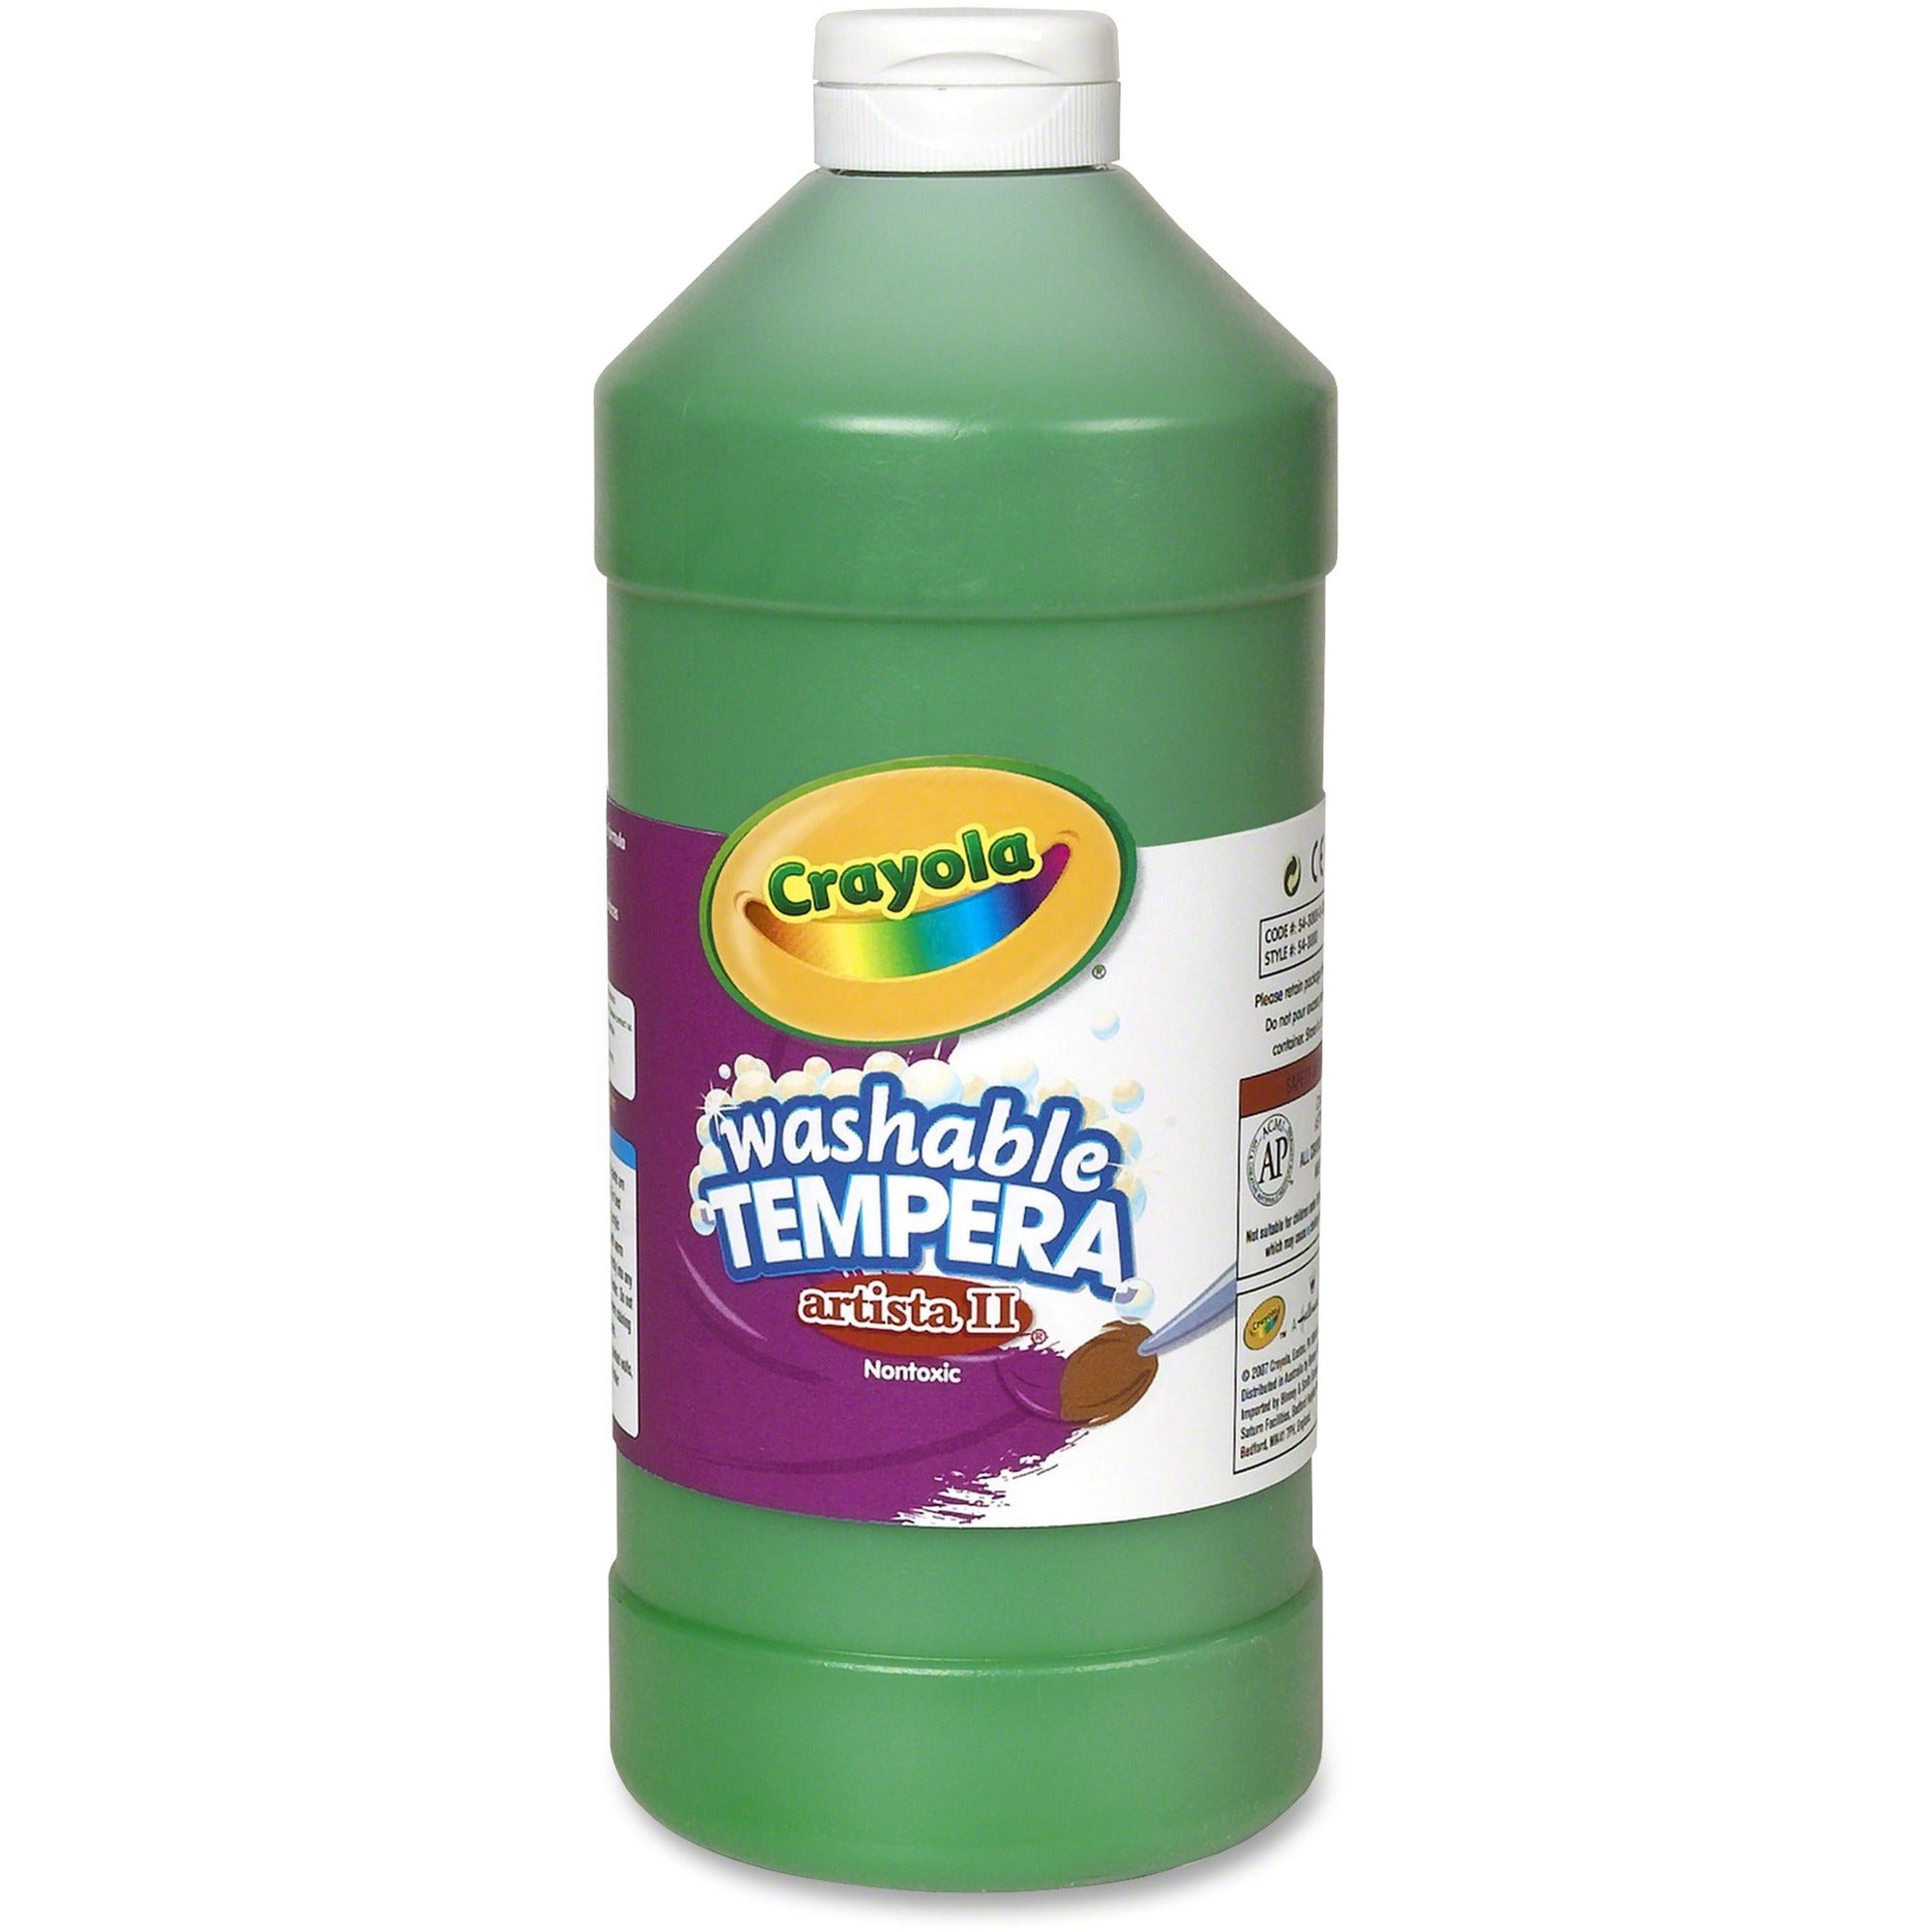 Crayola Washable Tempera Paint - 2 lb - 1 Each - Green - 